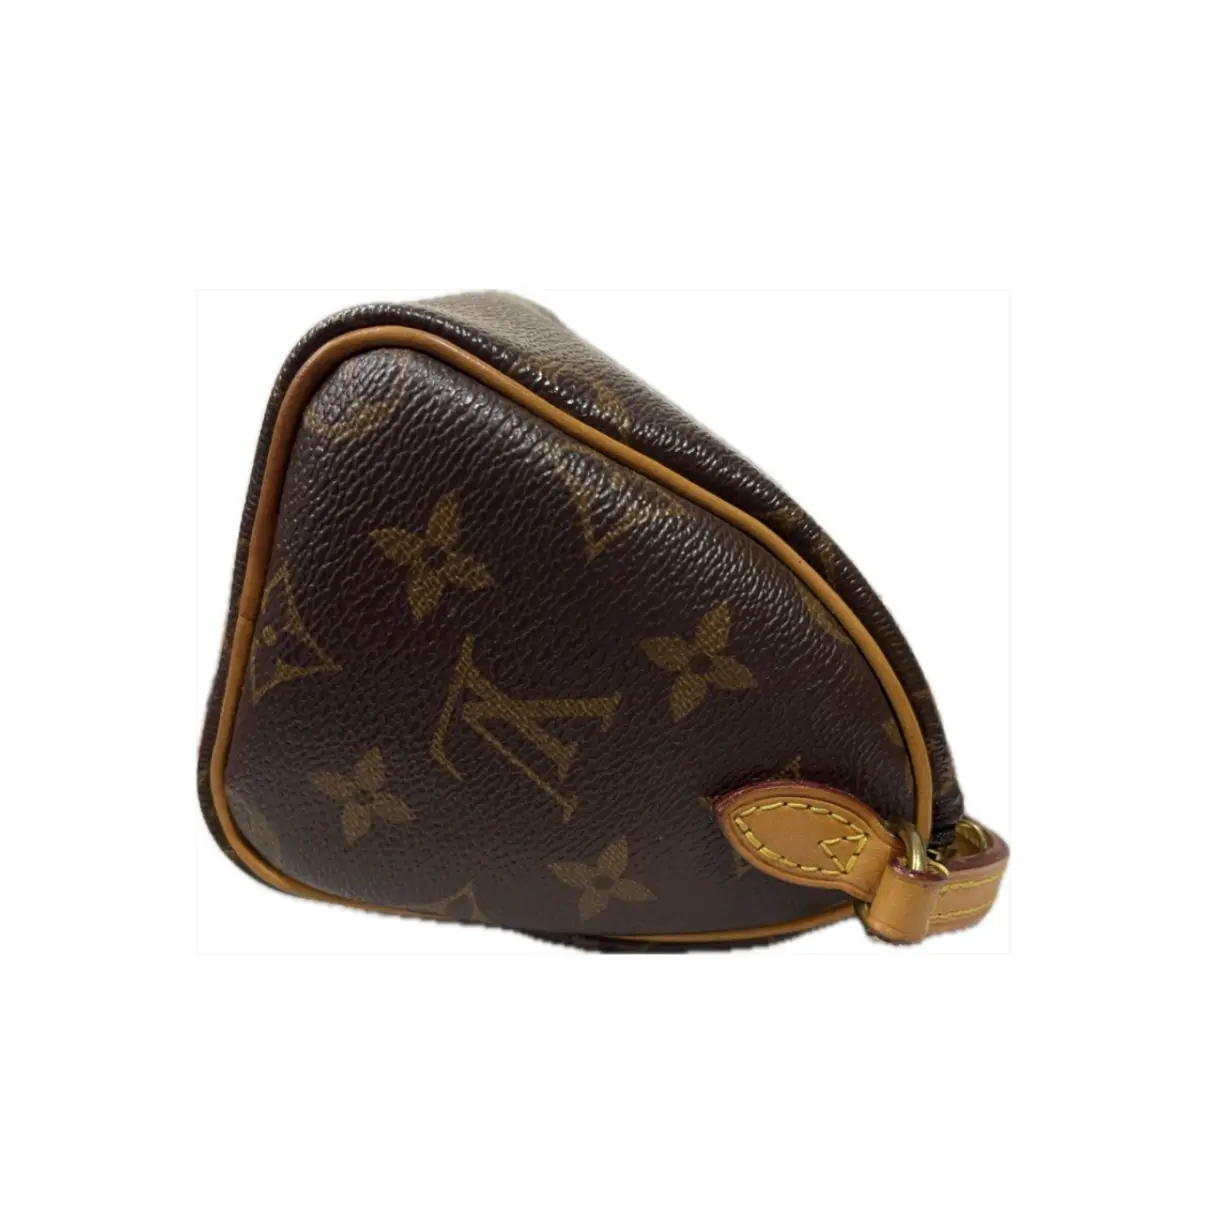 Nano Speedy / Mini HL leather crossbody bag Louis Vuitton